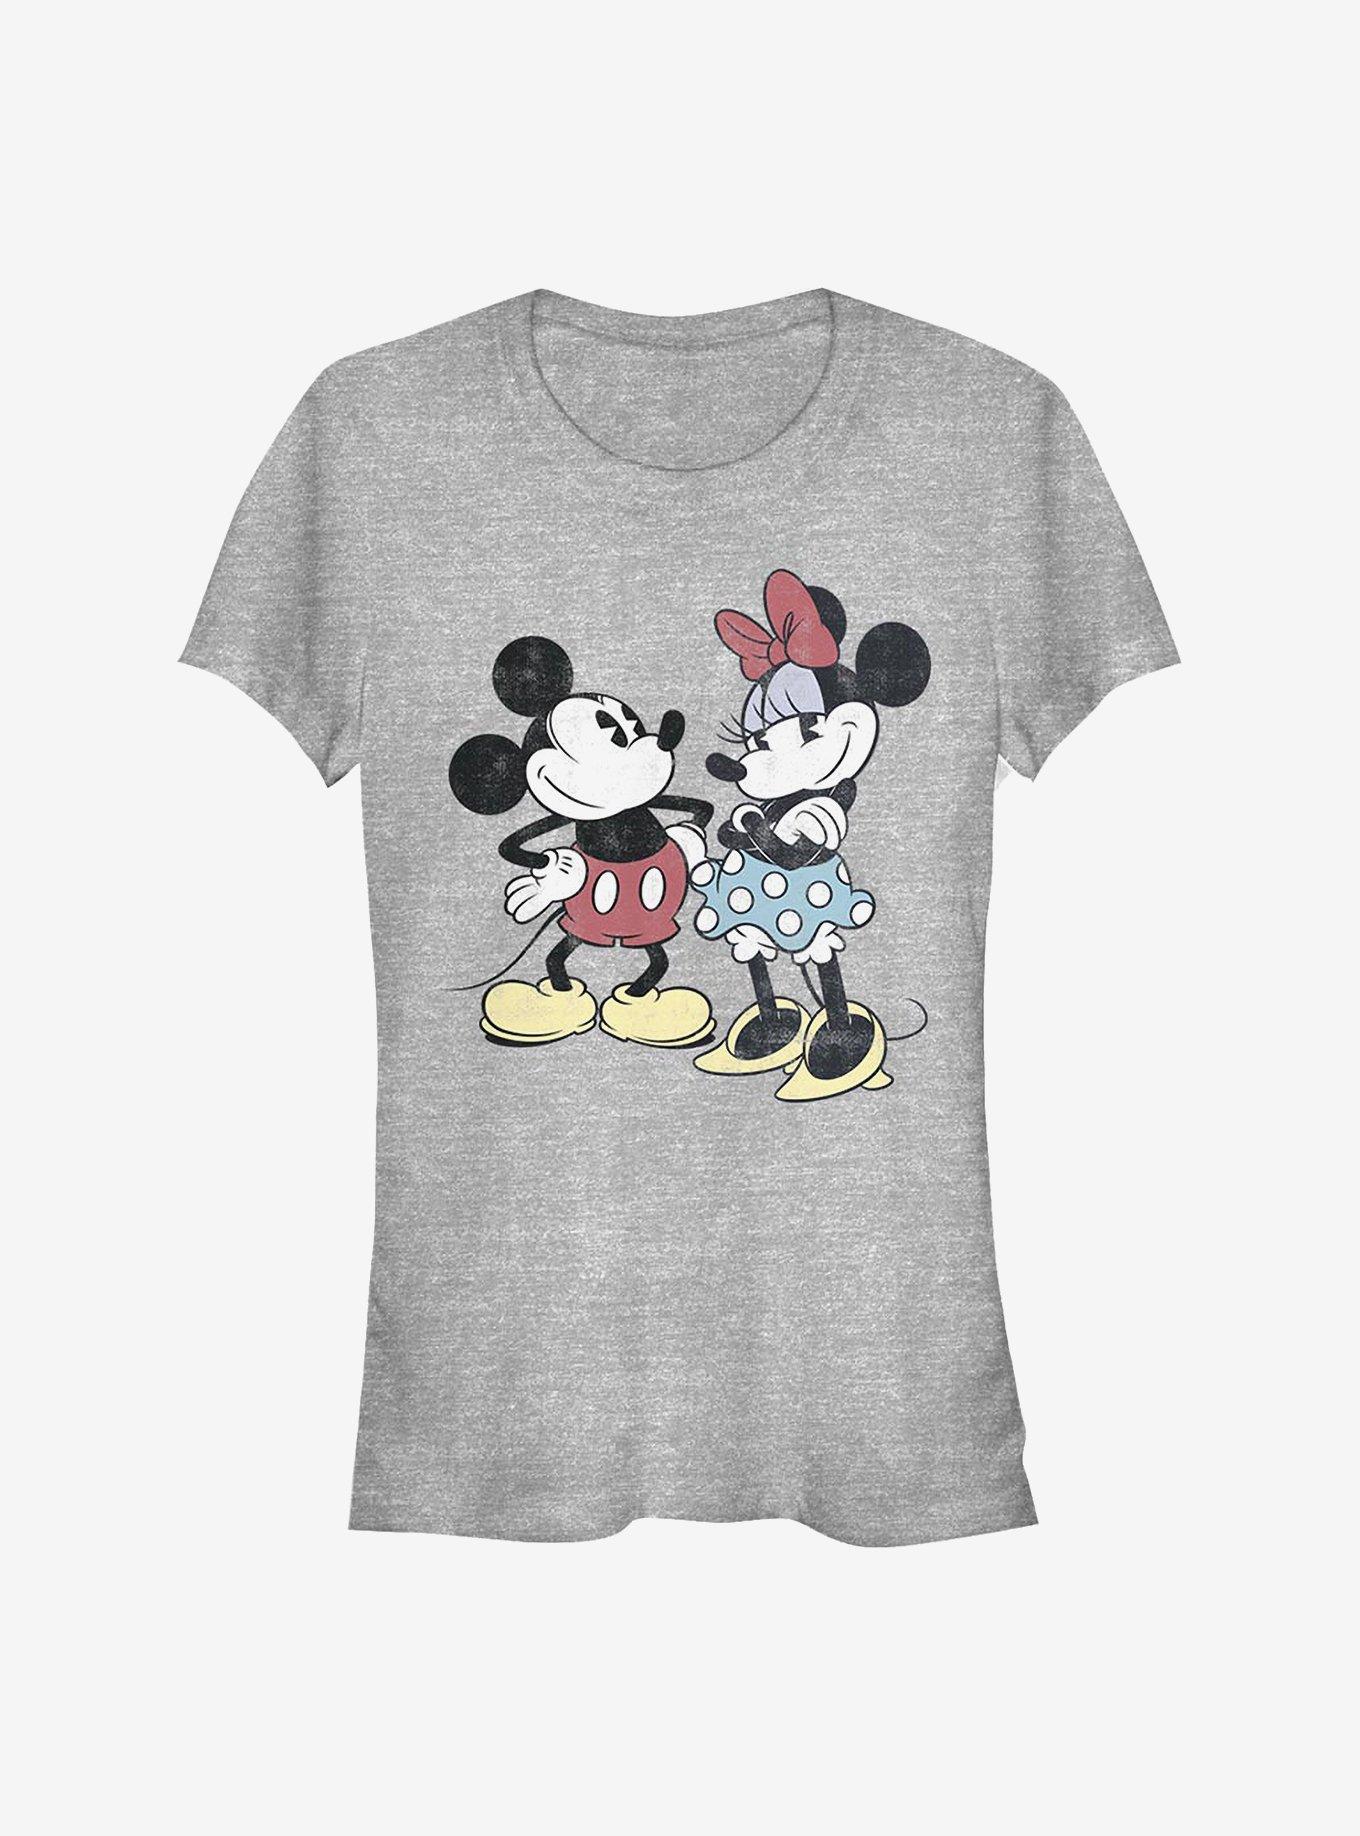 Disney Mickey Mouse Mickey Minnie Retro Girls T-Shirt, , hi-res